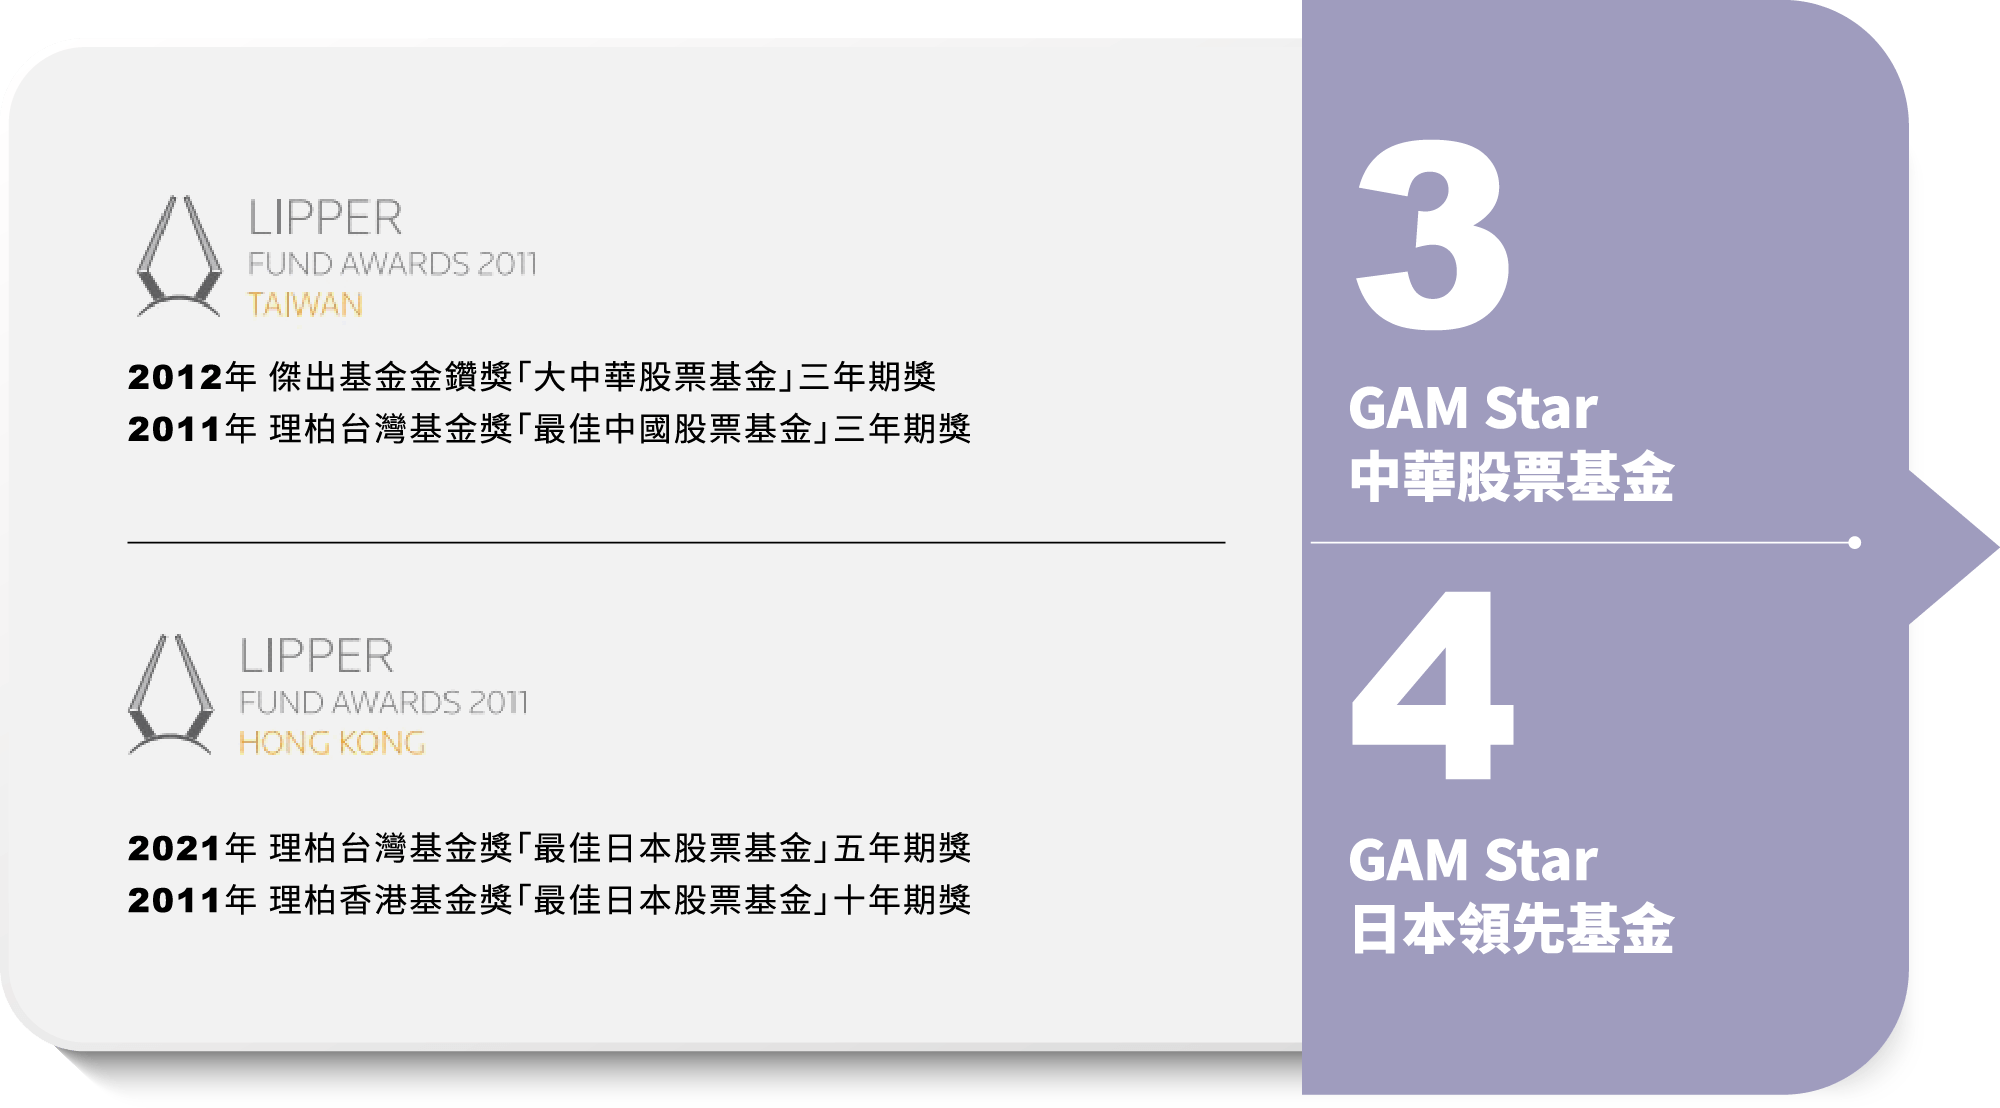 3 GAM Star - 中華股票基金；4 GAM Star - 日本領先基金